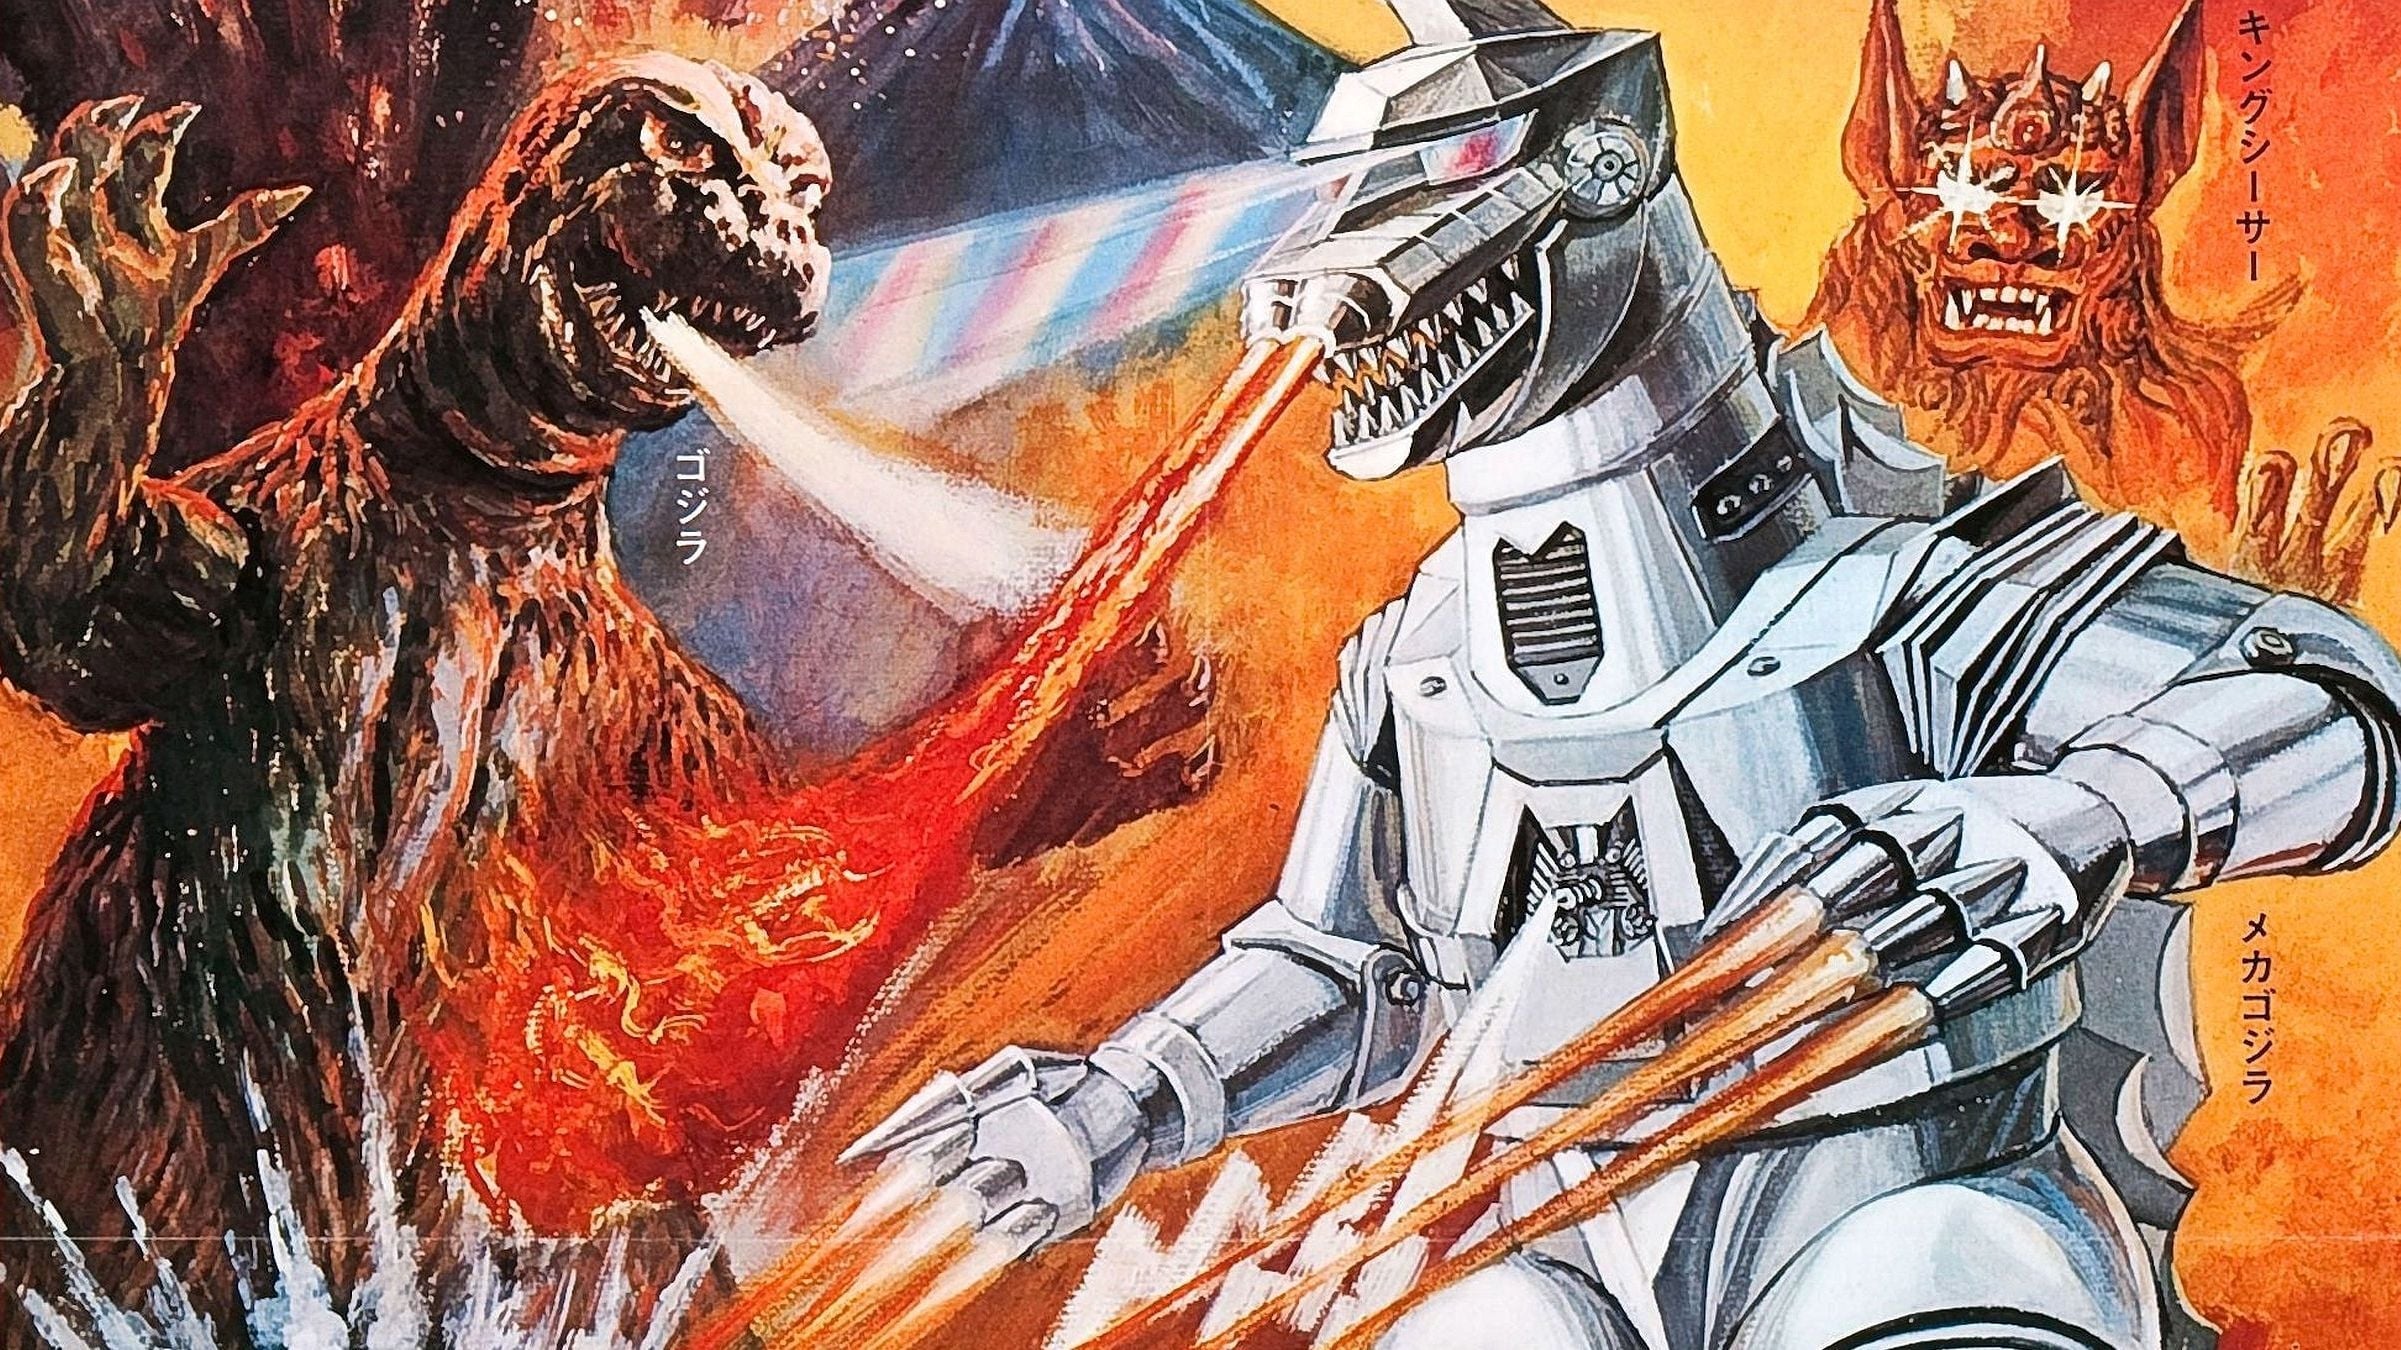 Godzilla vs. Mechagodzilla (1974)